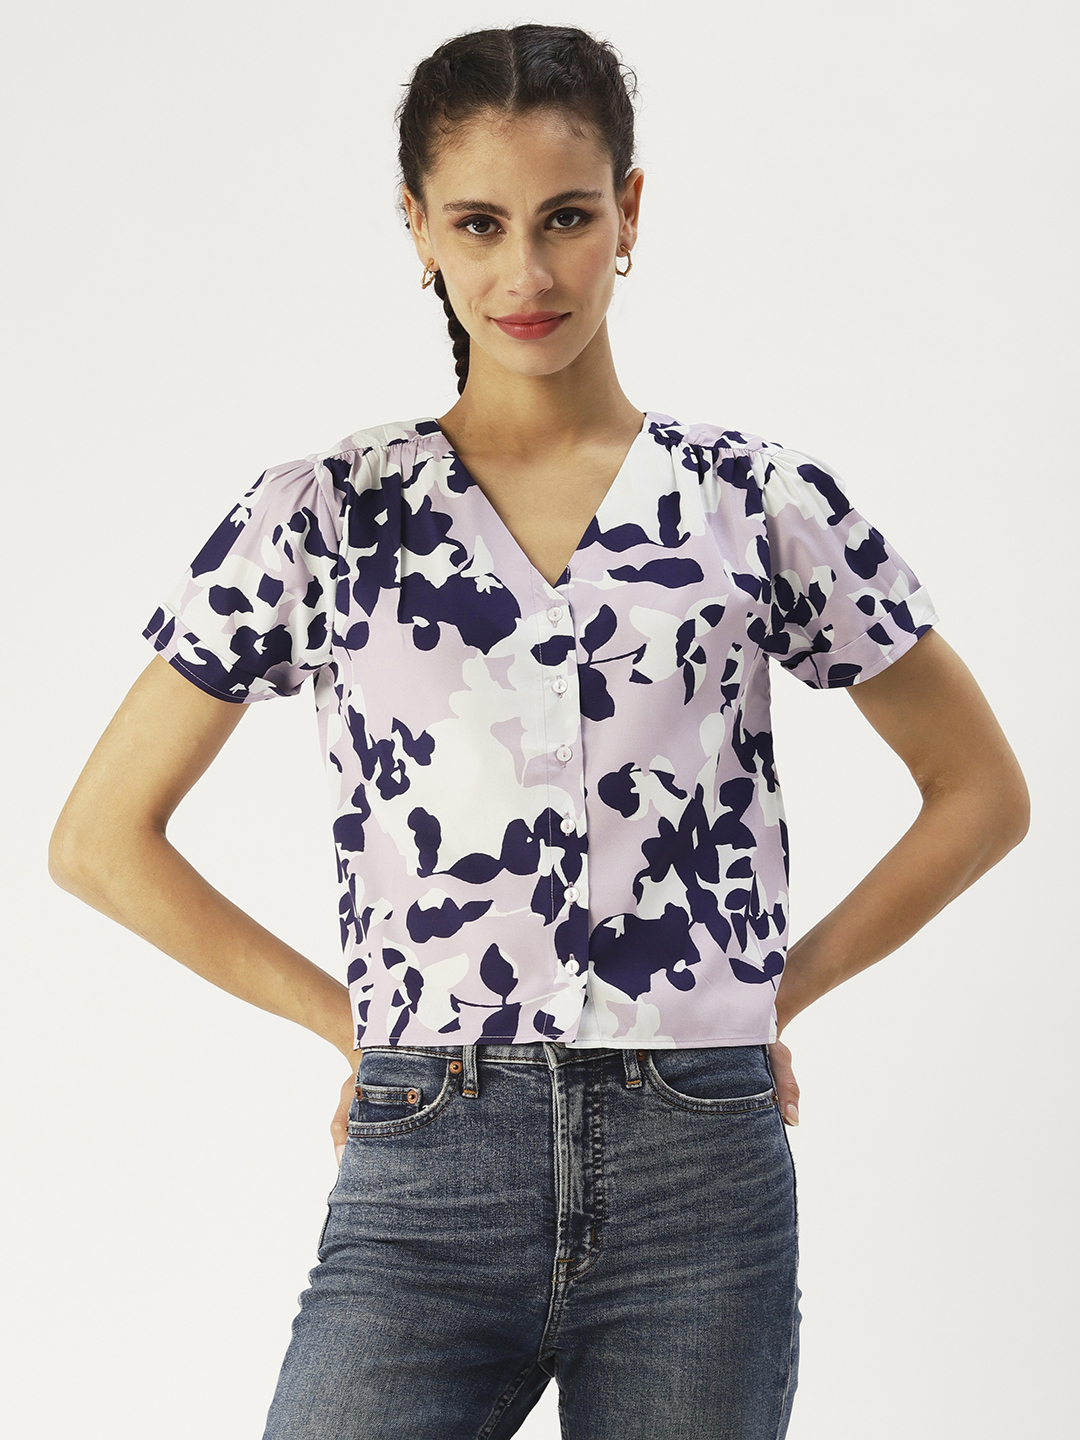 UPPADA Chiffon Tops For Women Dressy Casual Square Neck T-shirt